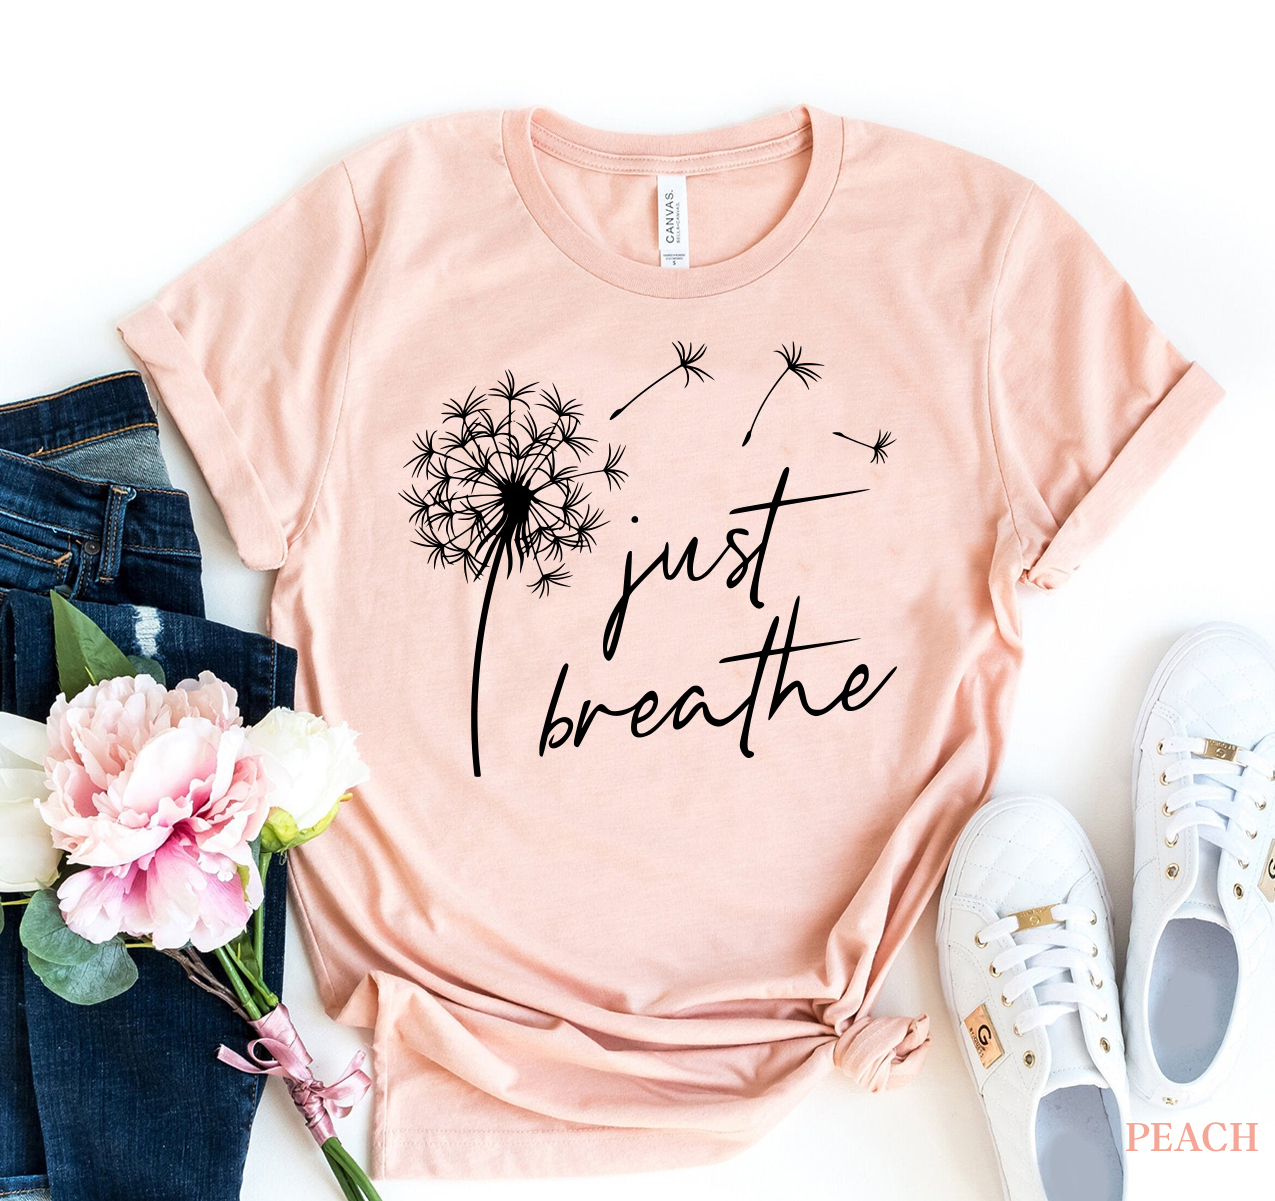 motivational shirt,yoga tshirt Just Breathe shirt,Cute Shirt,Shirt for women